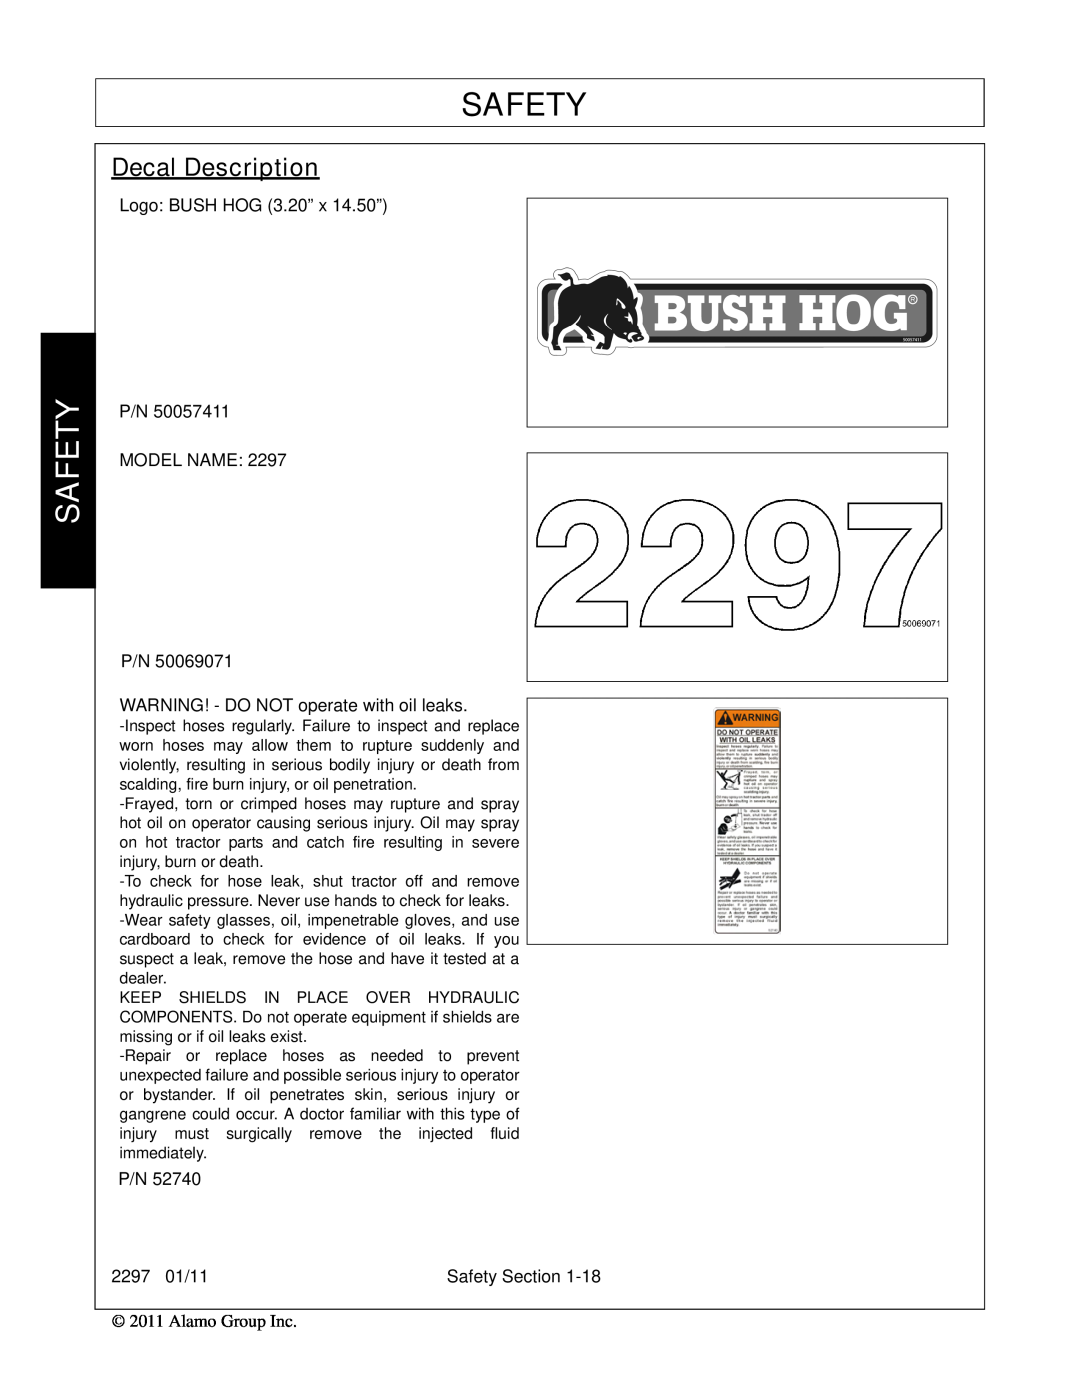 Bush Hog 2297 manual Safety, Decal Description 